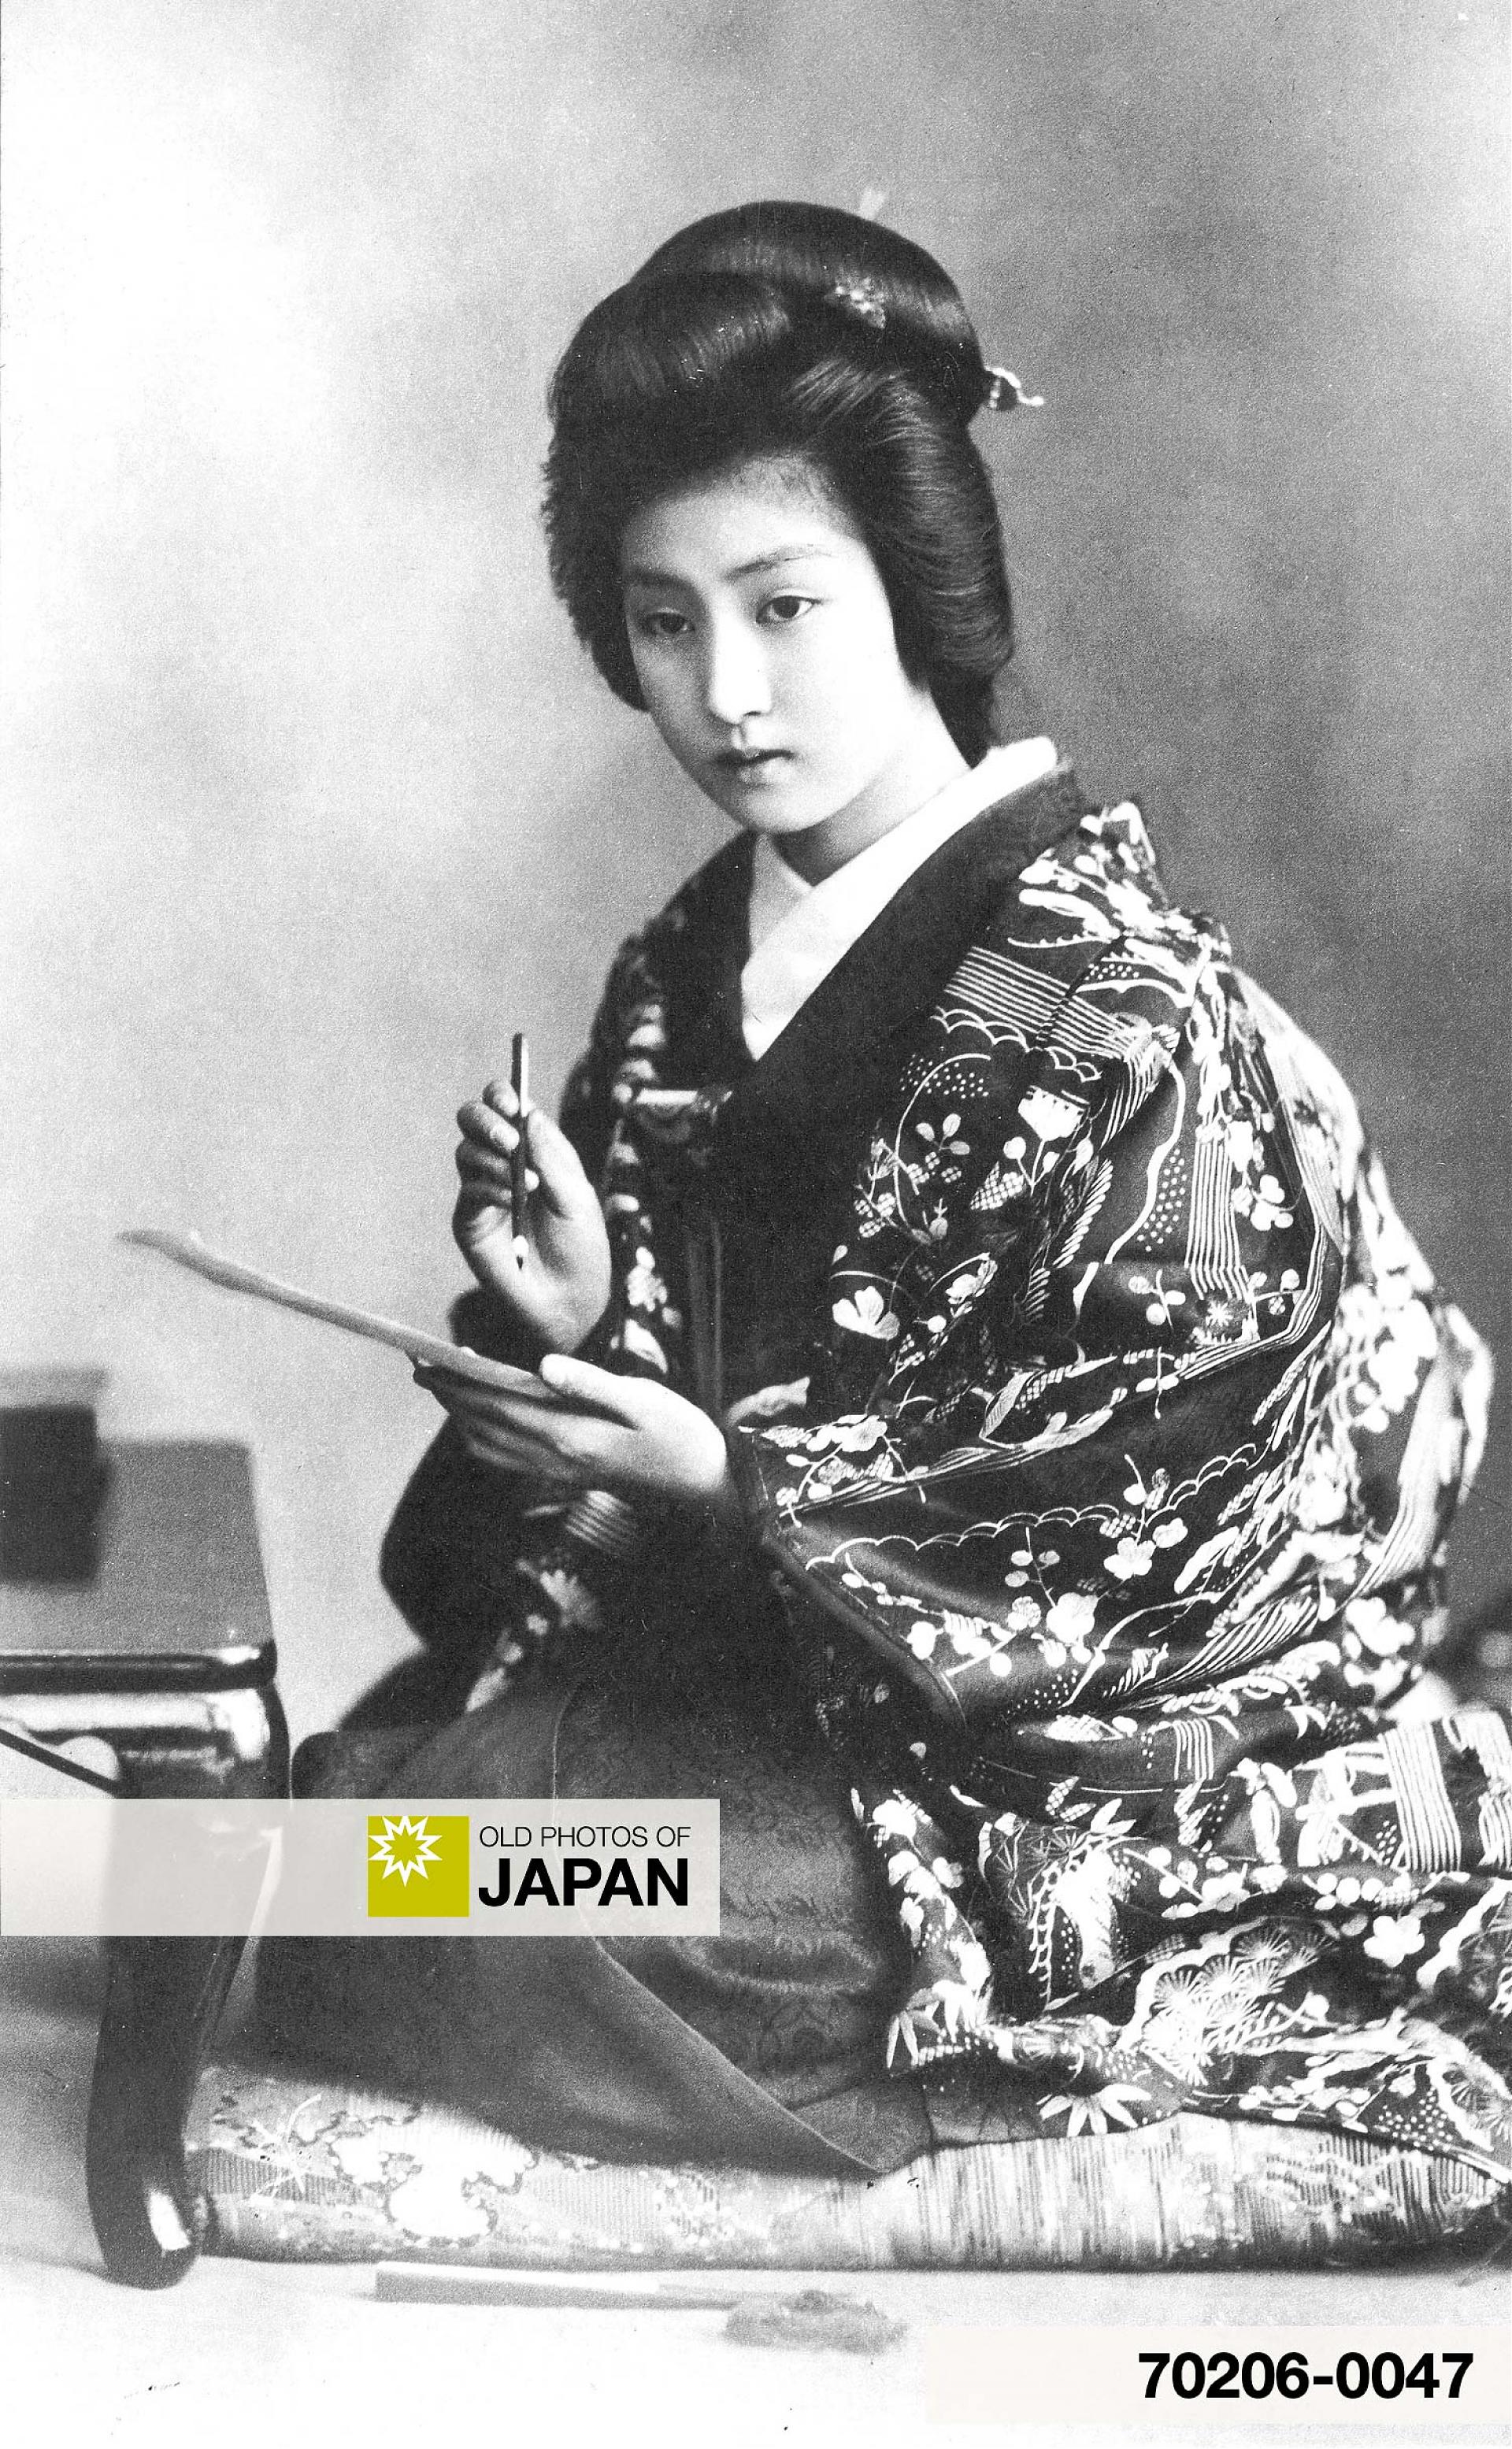 70206-0047 - Japanese woman in kimono writing, 1920s